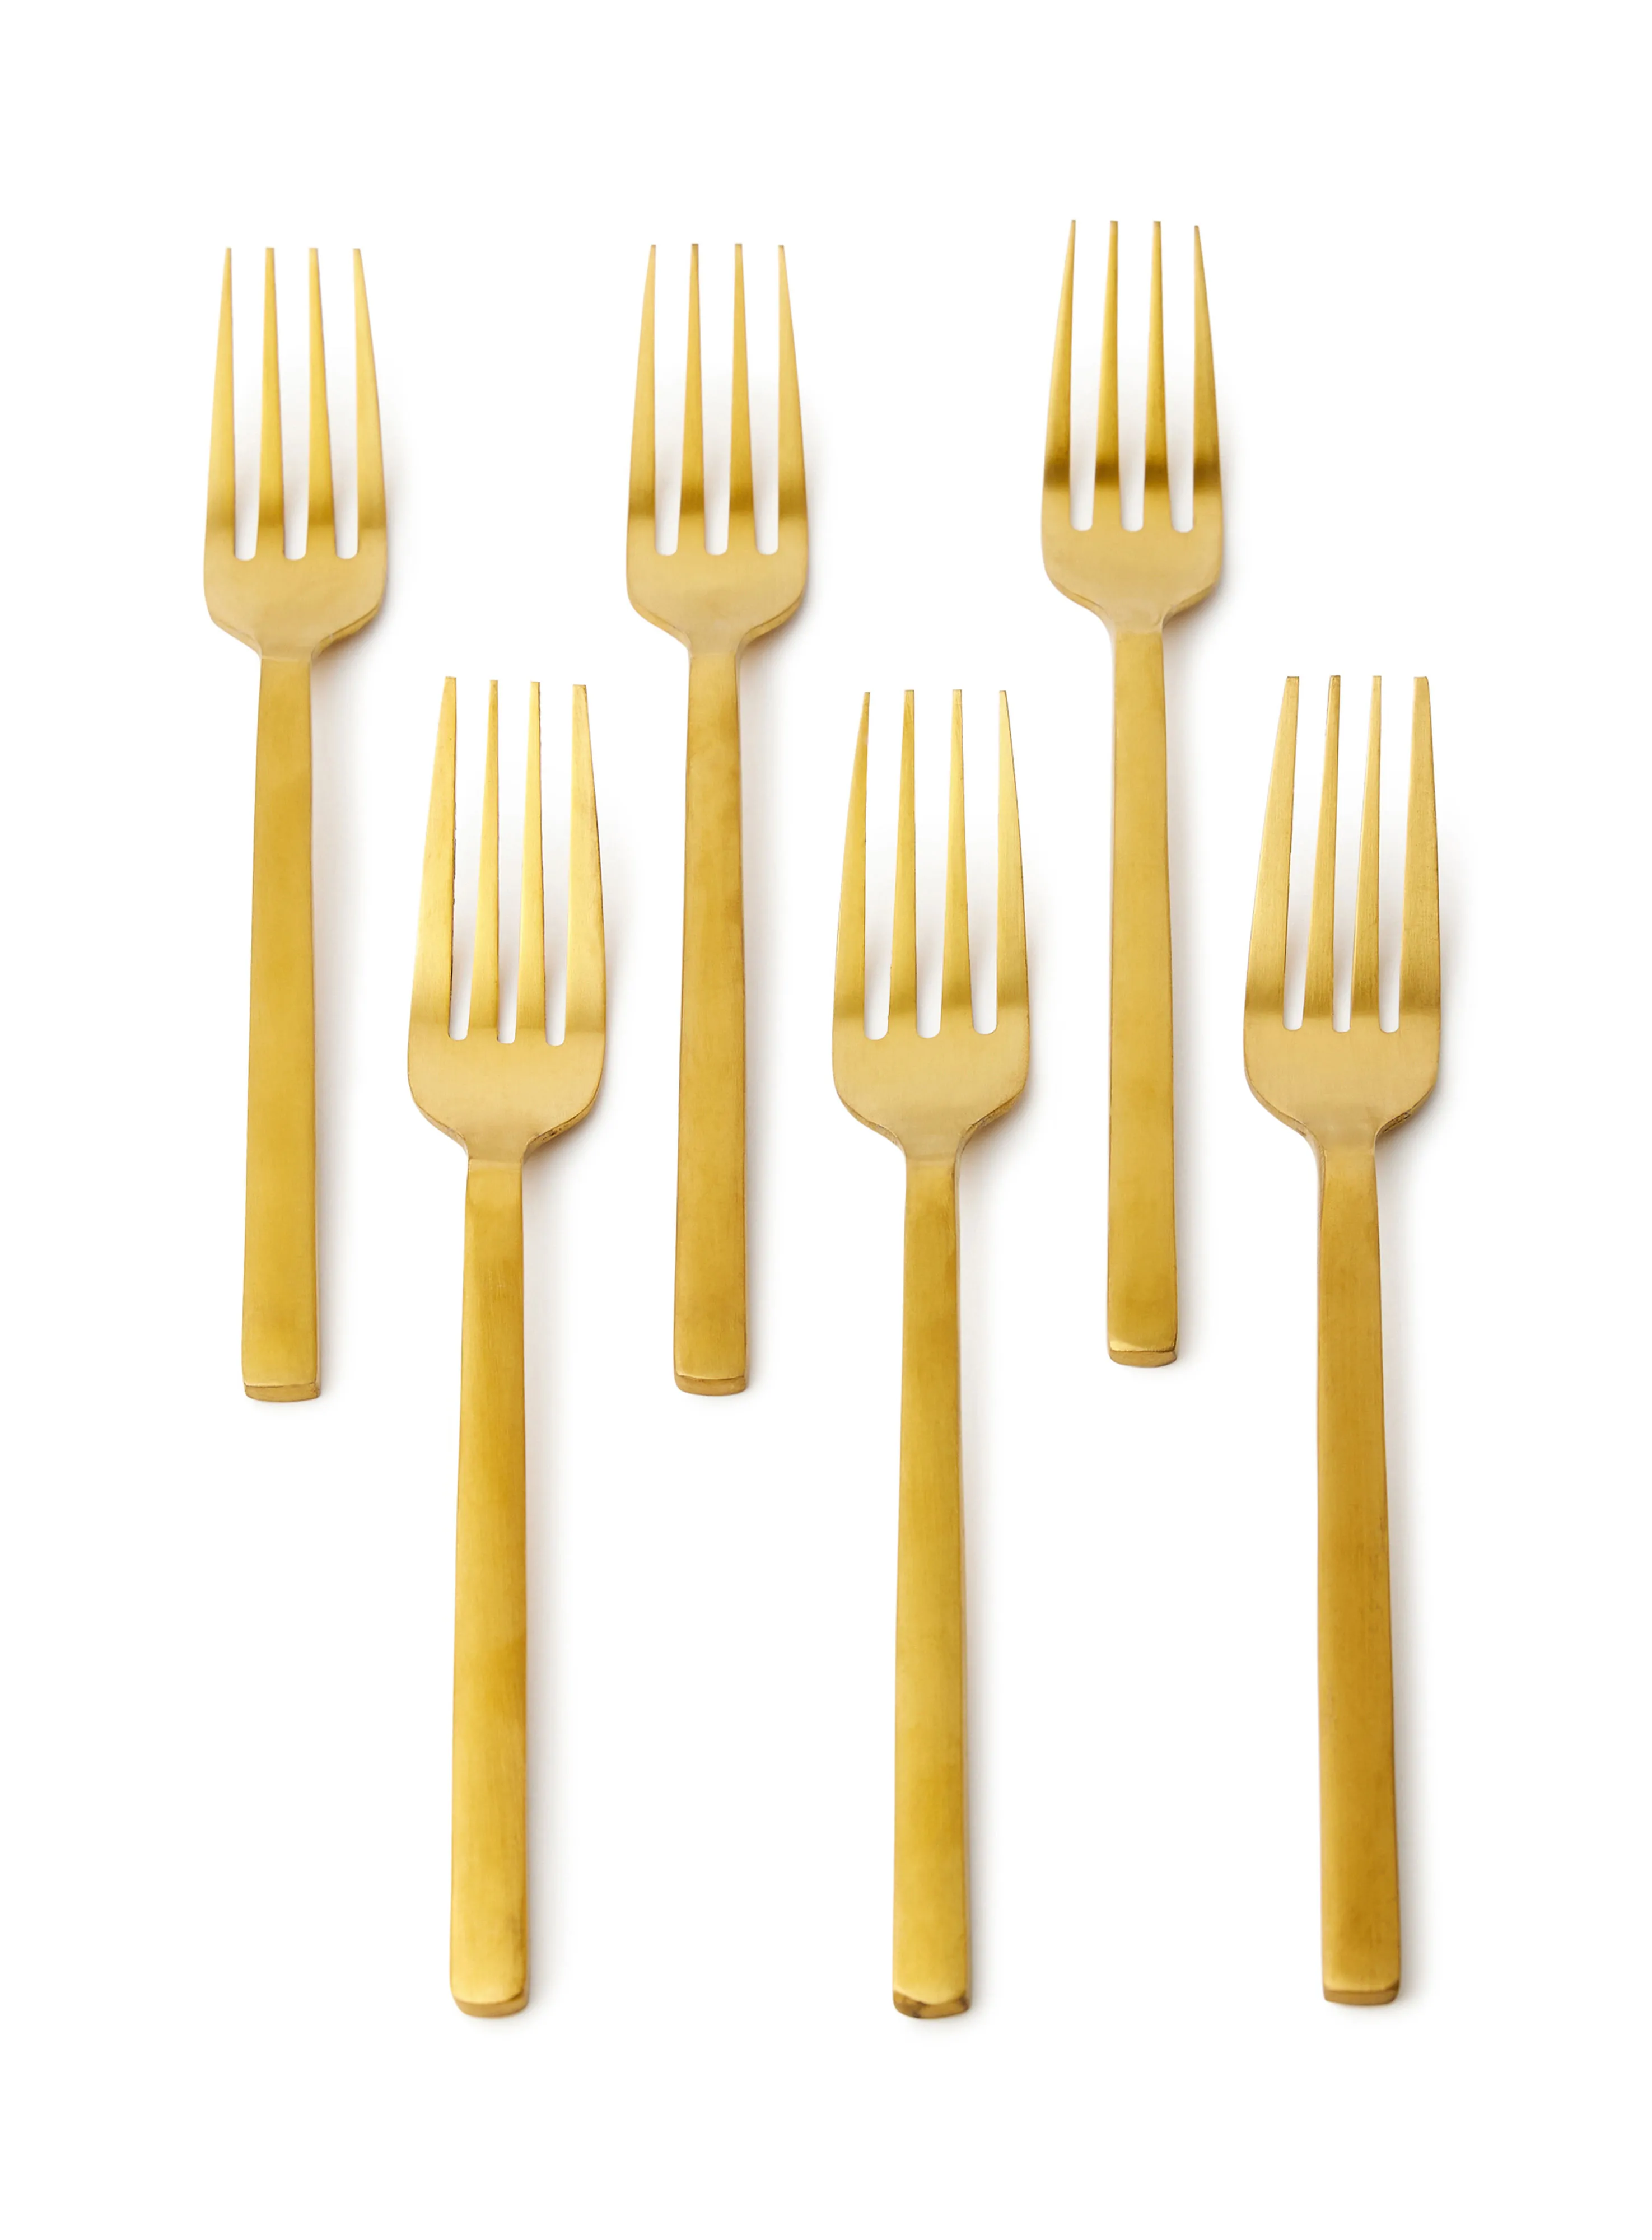 noon east 6 Piece Forks Set - Made Of Stainless Steel - Silverware Flatware - Fork Set - Serves 6 - Design Gold-Lyra